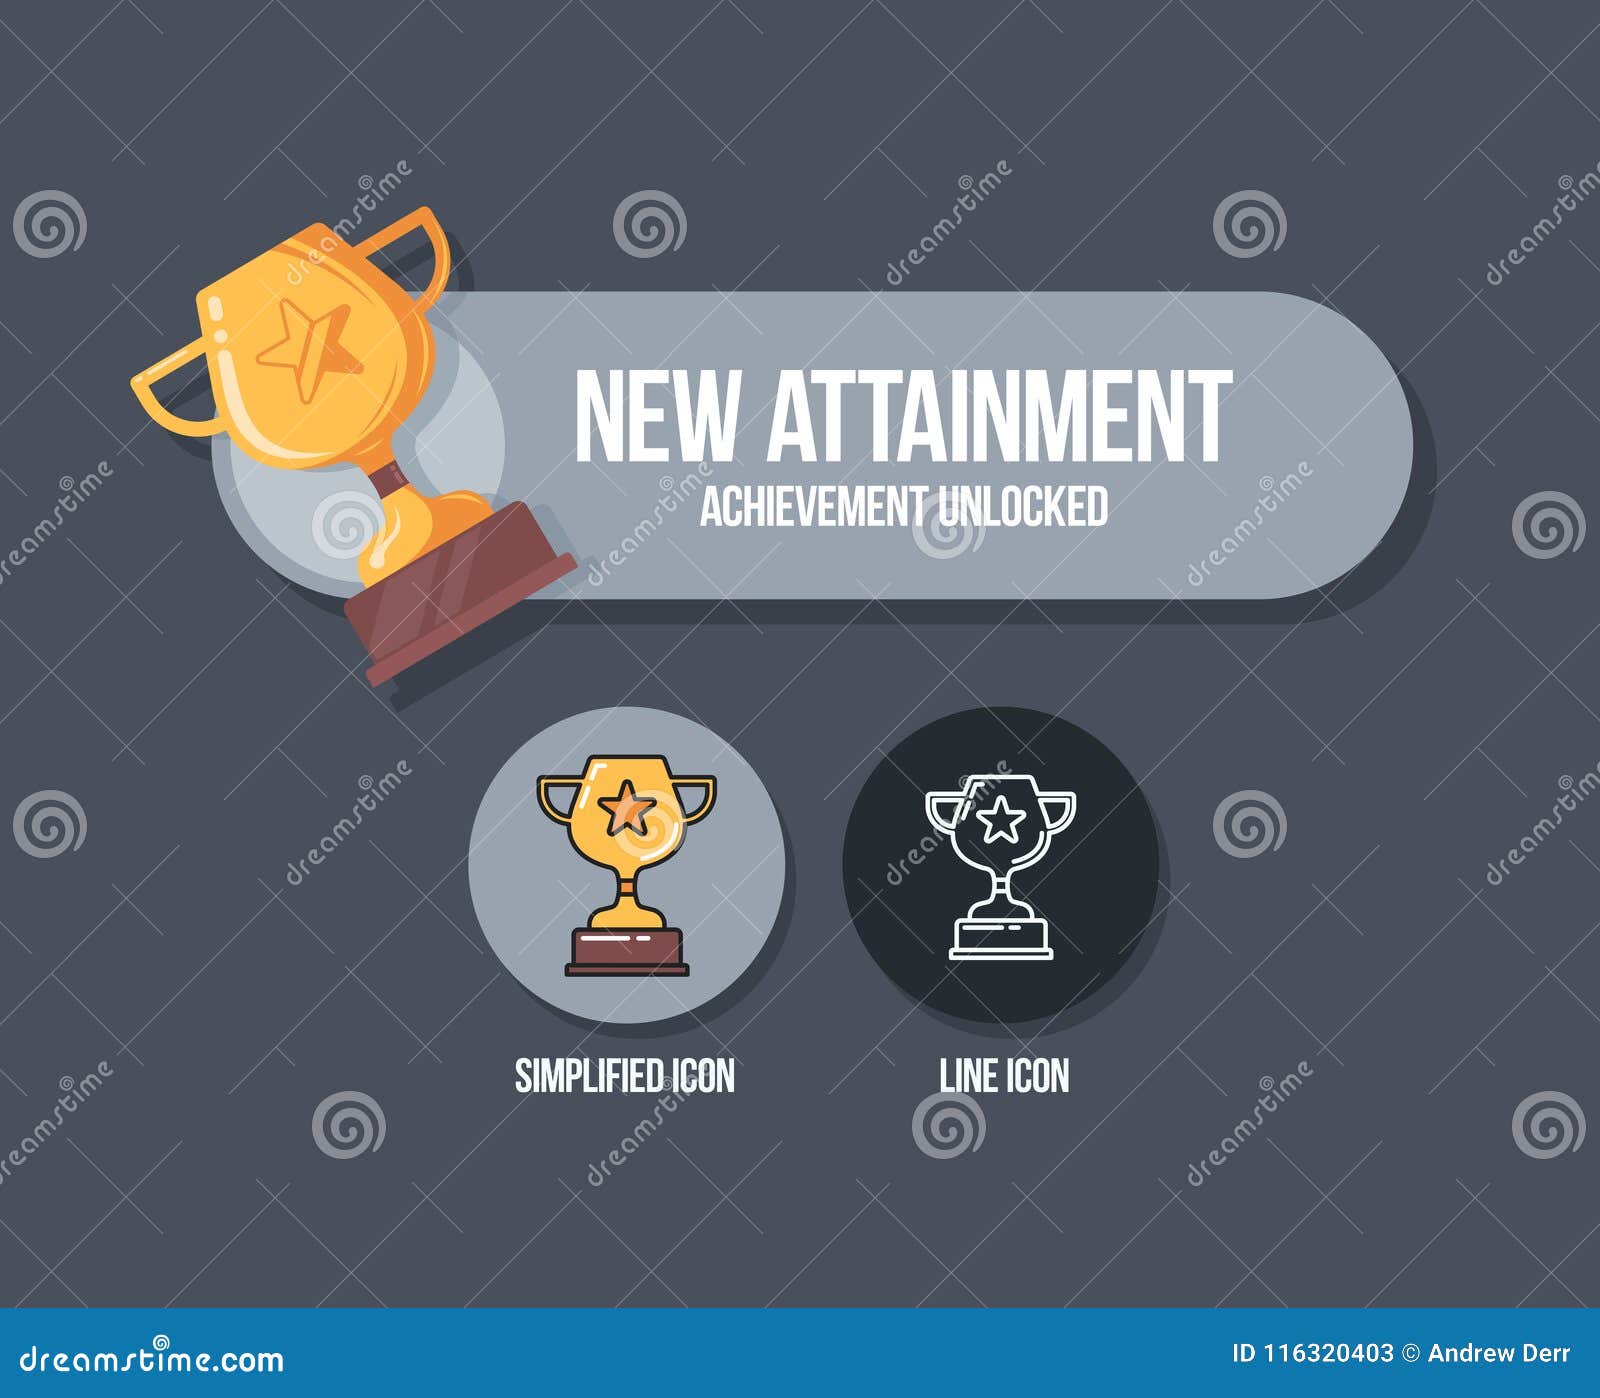 achievement panel . attainment banner concept with winner cup. reward icon in cartoon style.